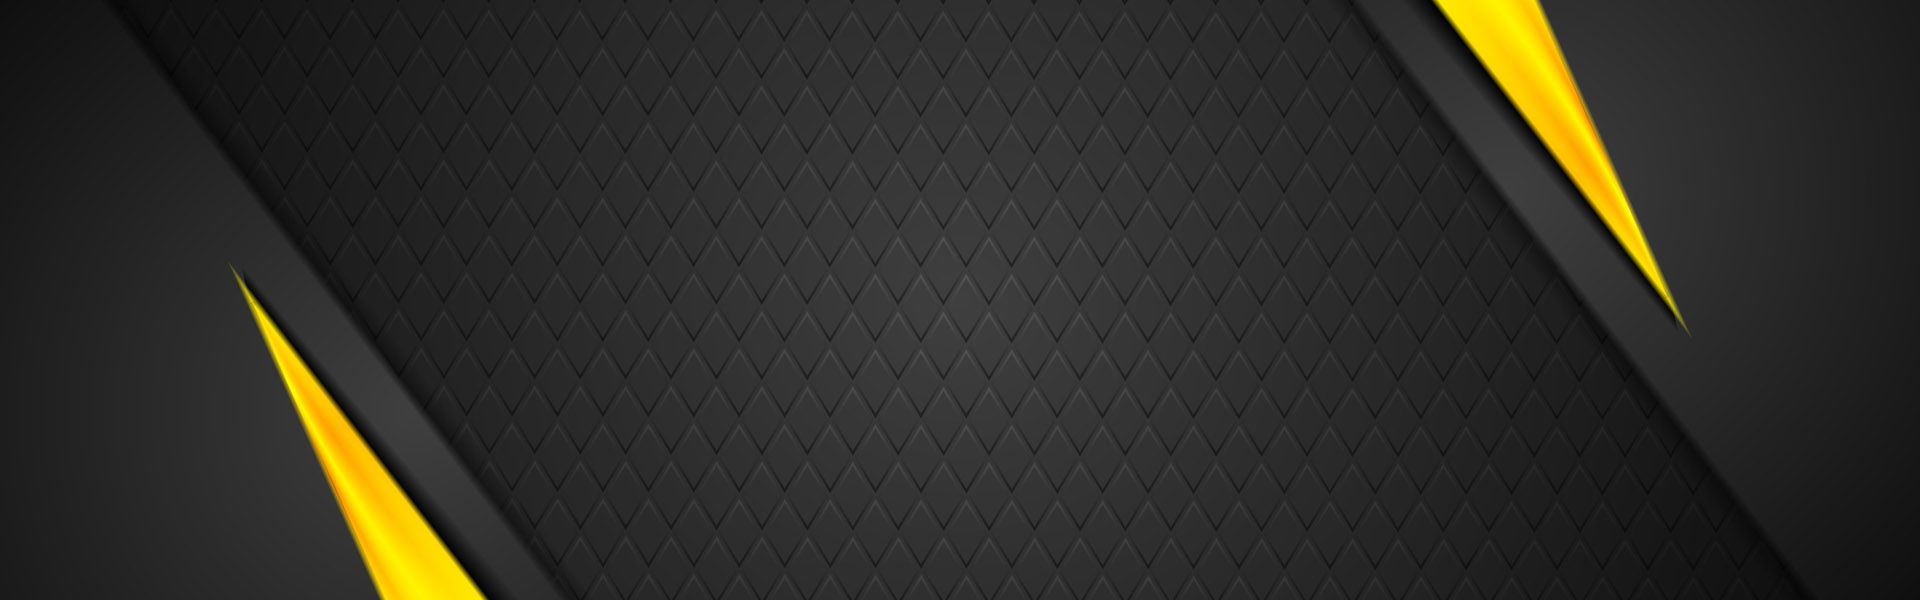 Black Geometric Pattern Background With Image